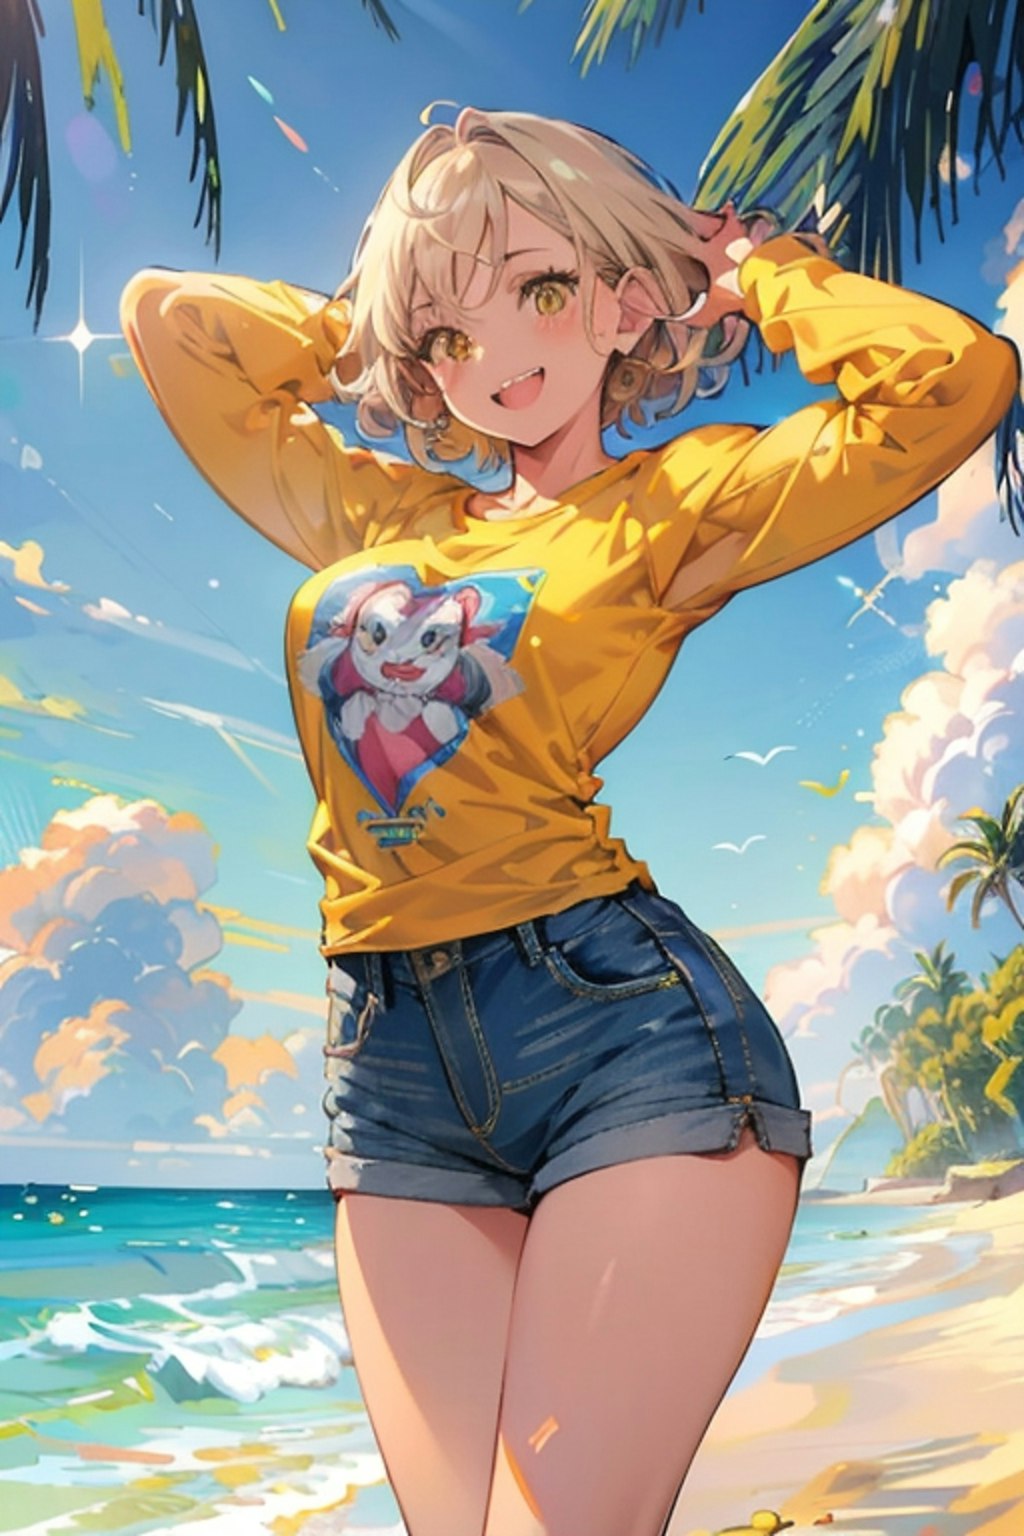 Girl at the Beach